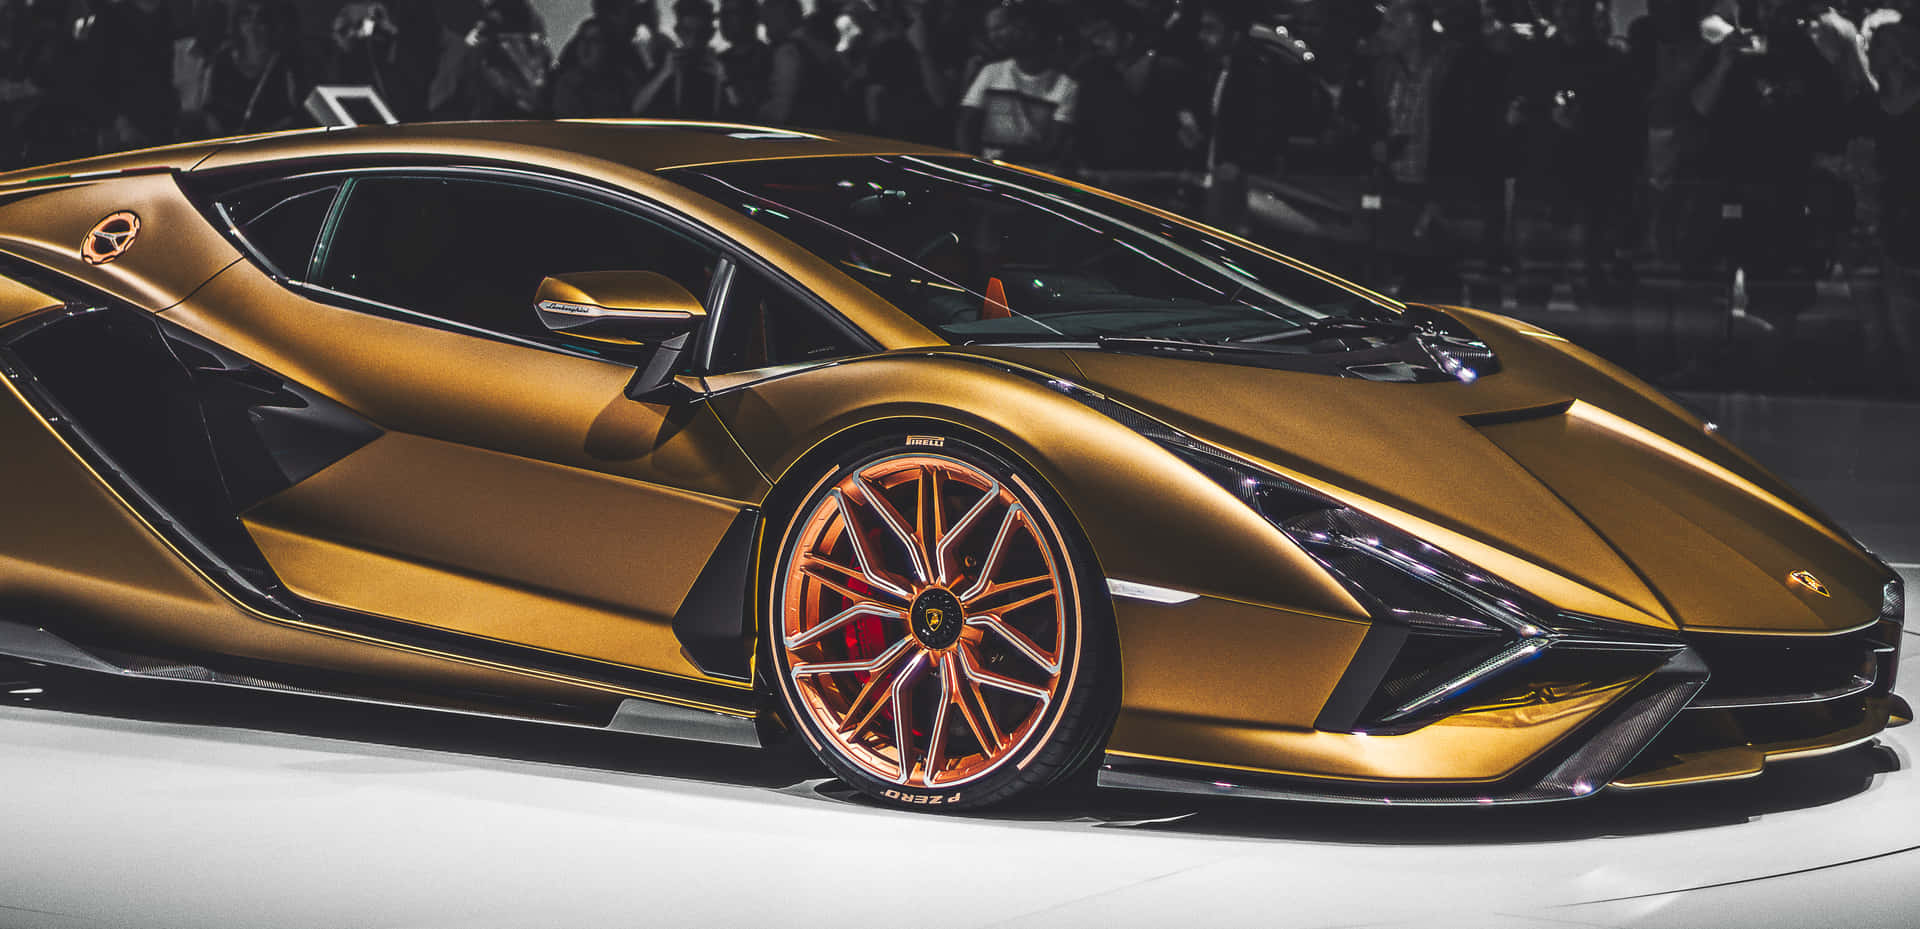 Autod'oro Lamborghini Gallardo Spyder Sfondo